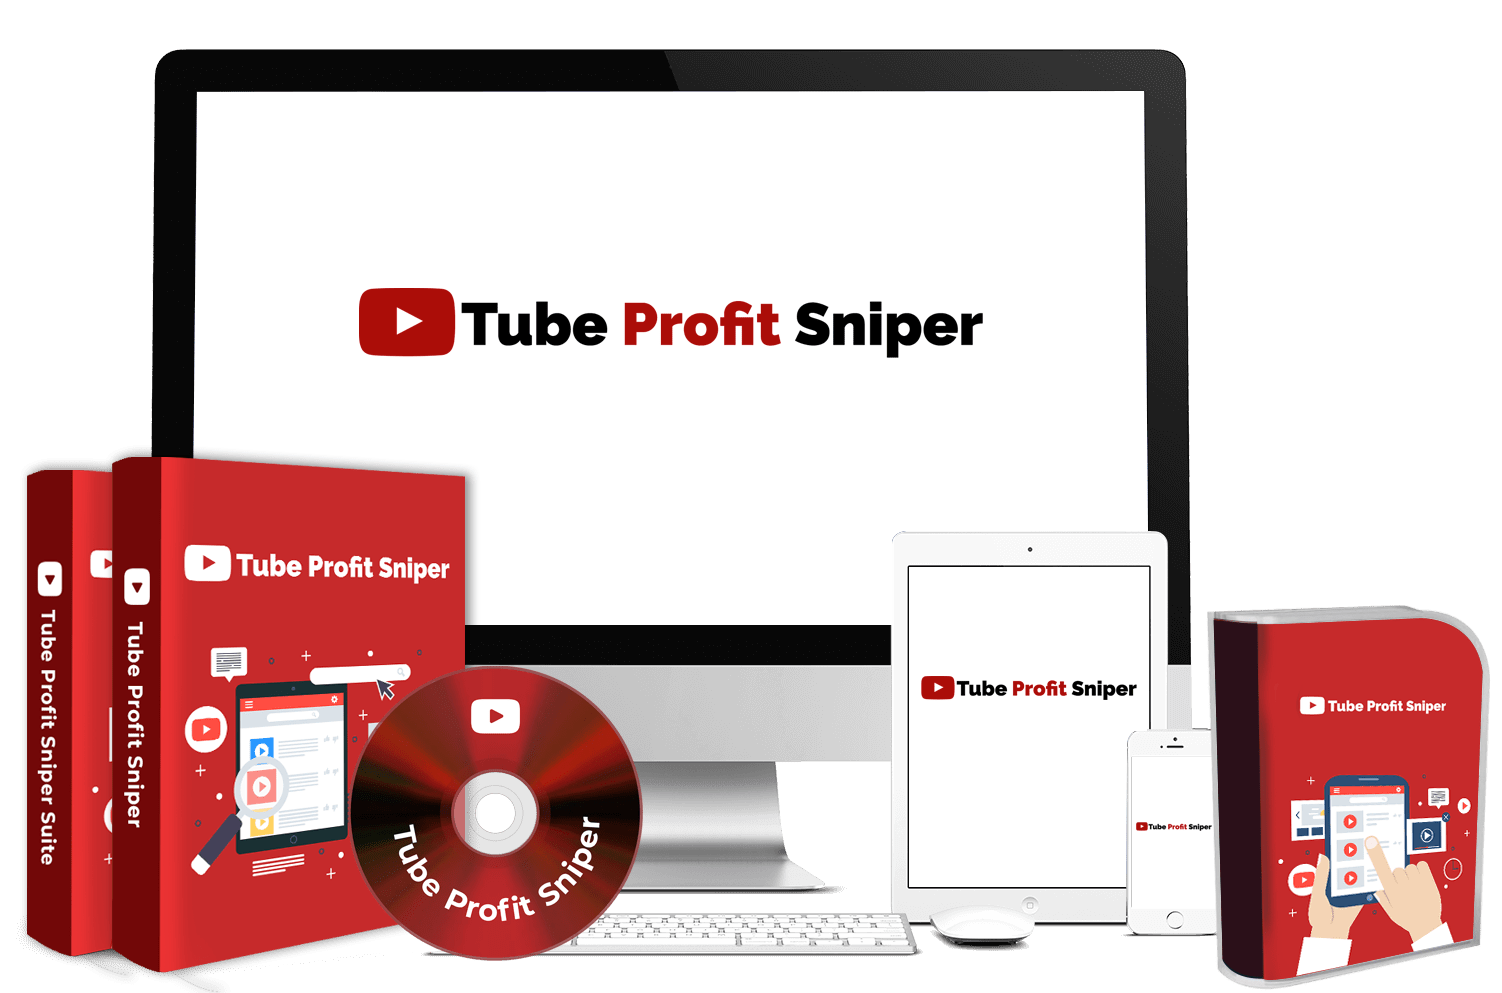 [GET] Tube Profit Sniper Download